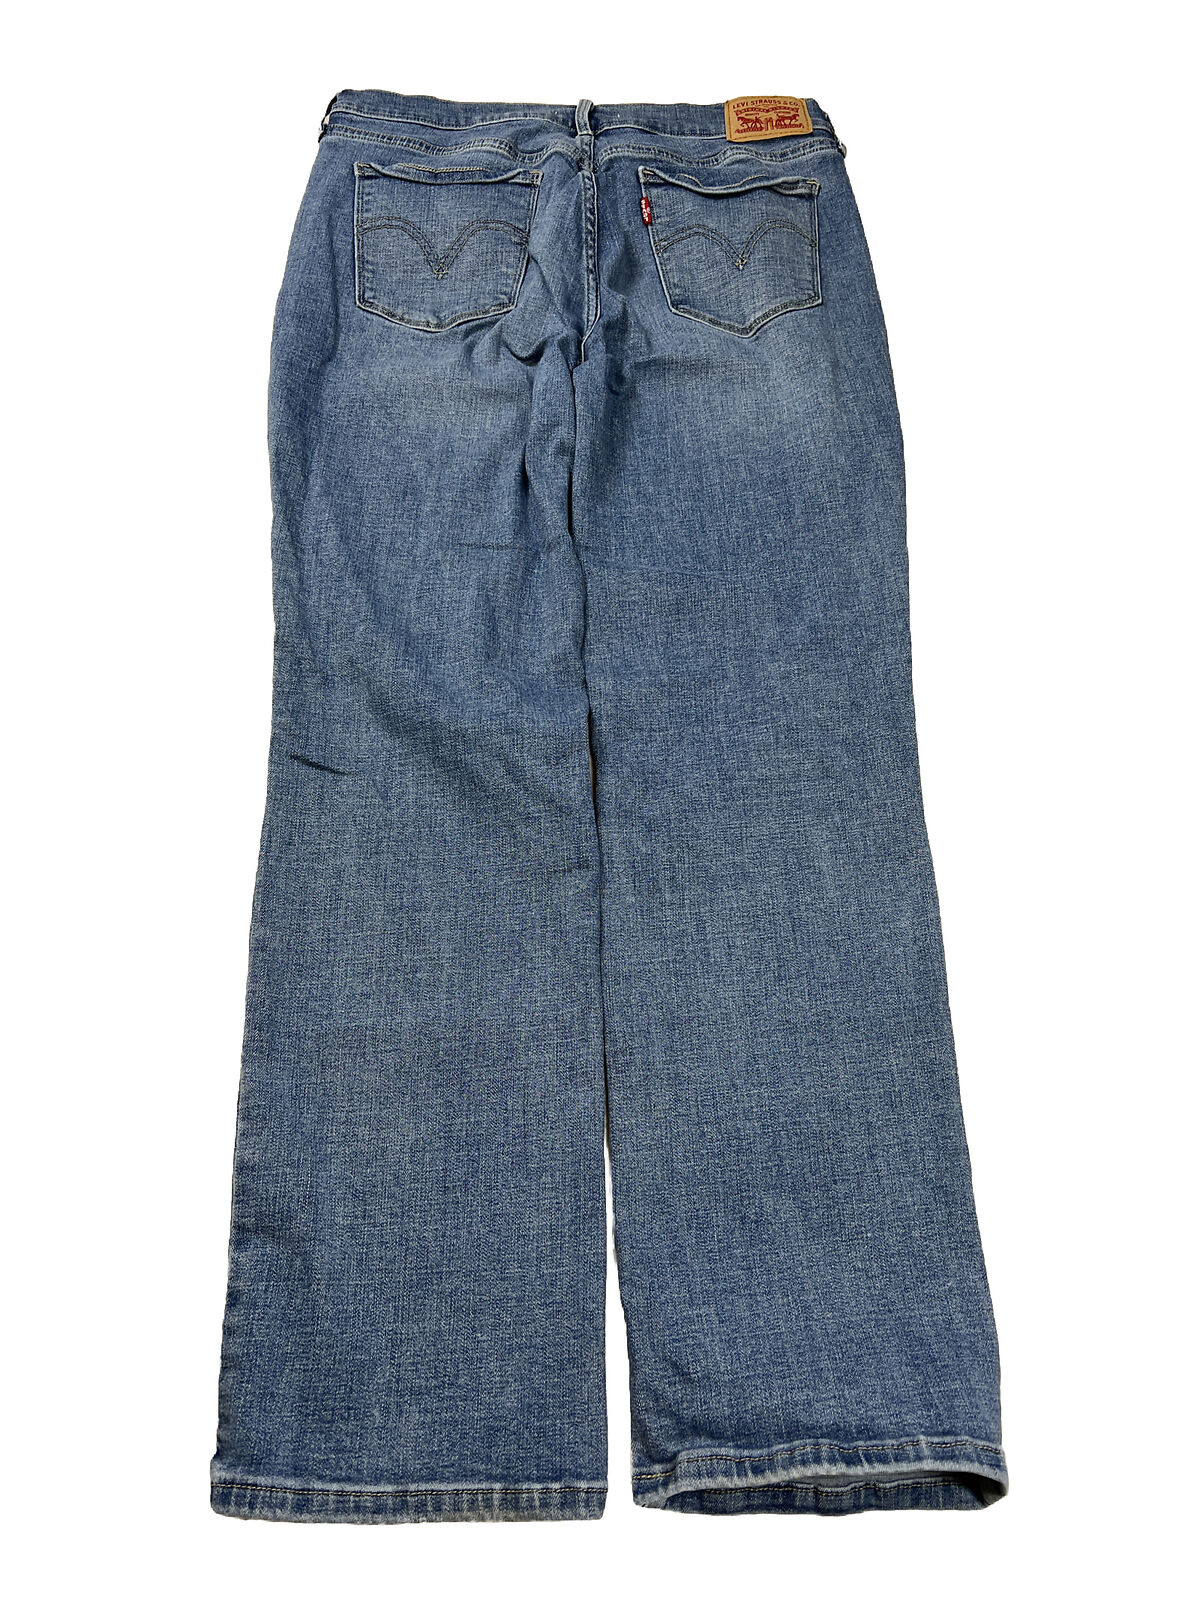 Levi's Women's Medium Wash 505 Straight Stretch Denim Jeans - 10